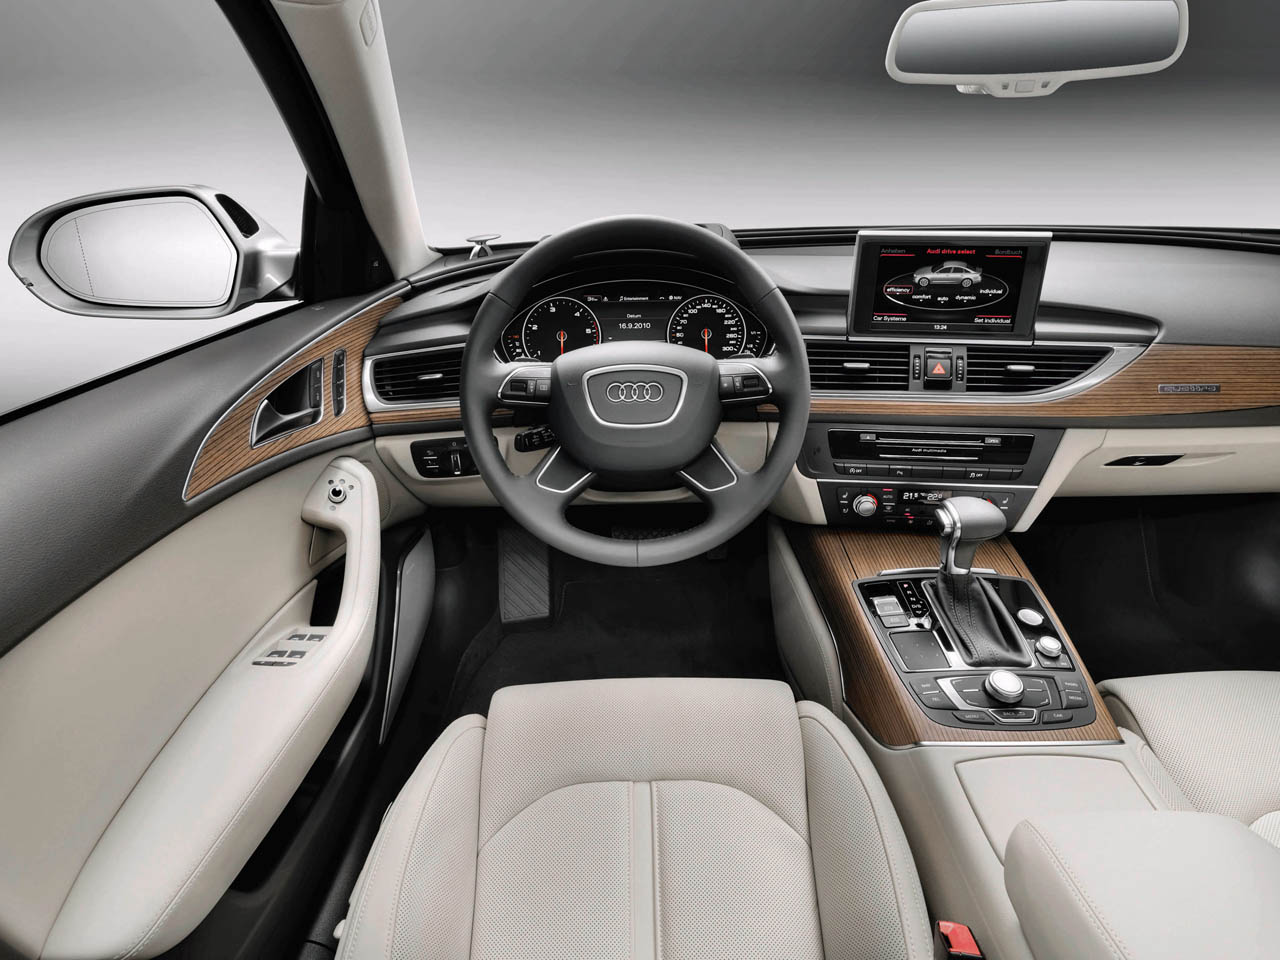 Luxury Car 2012 Audi A6 Review Dimension